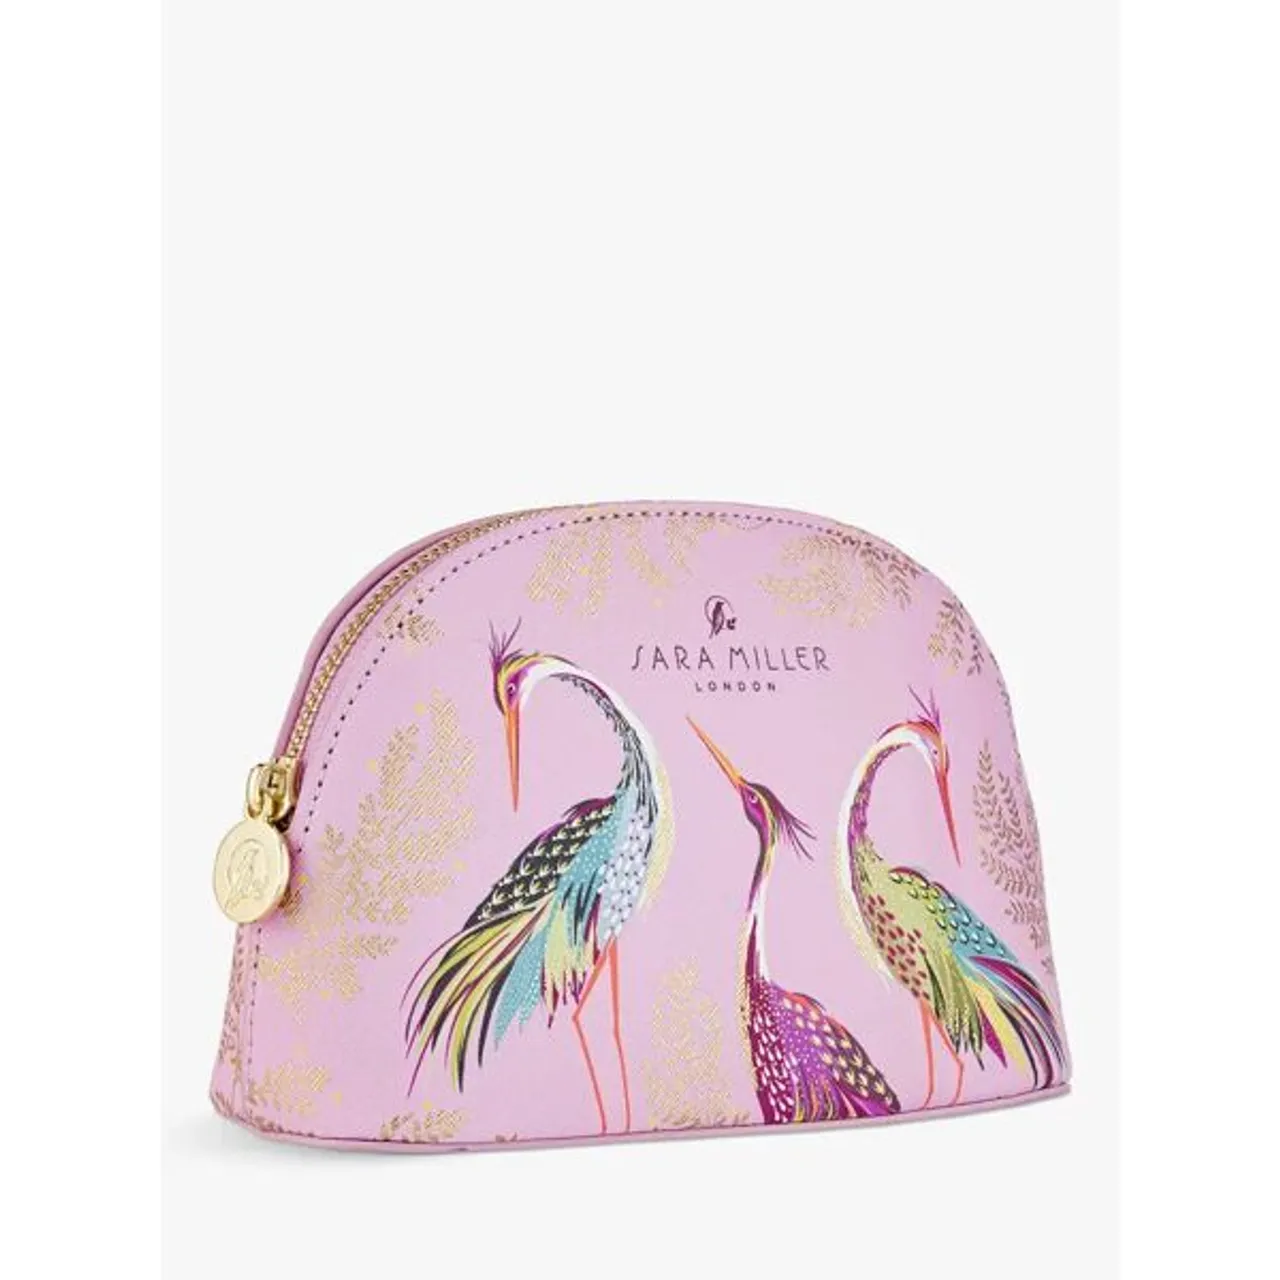 Sara Miller London Haveli Garden Cosmetic Bag, Pink/Multi - Pink/Multi - Unisex